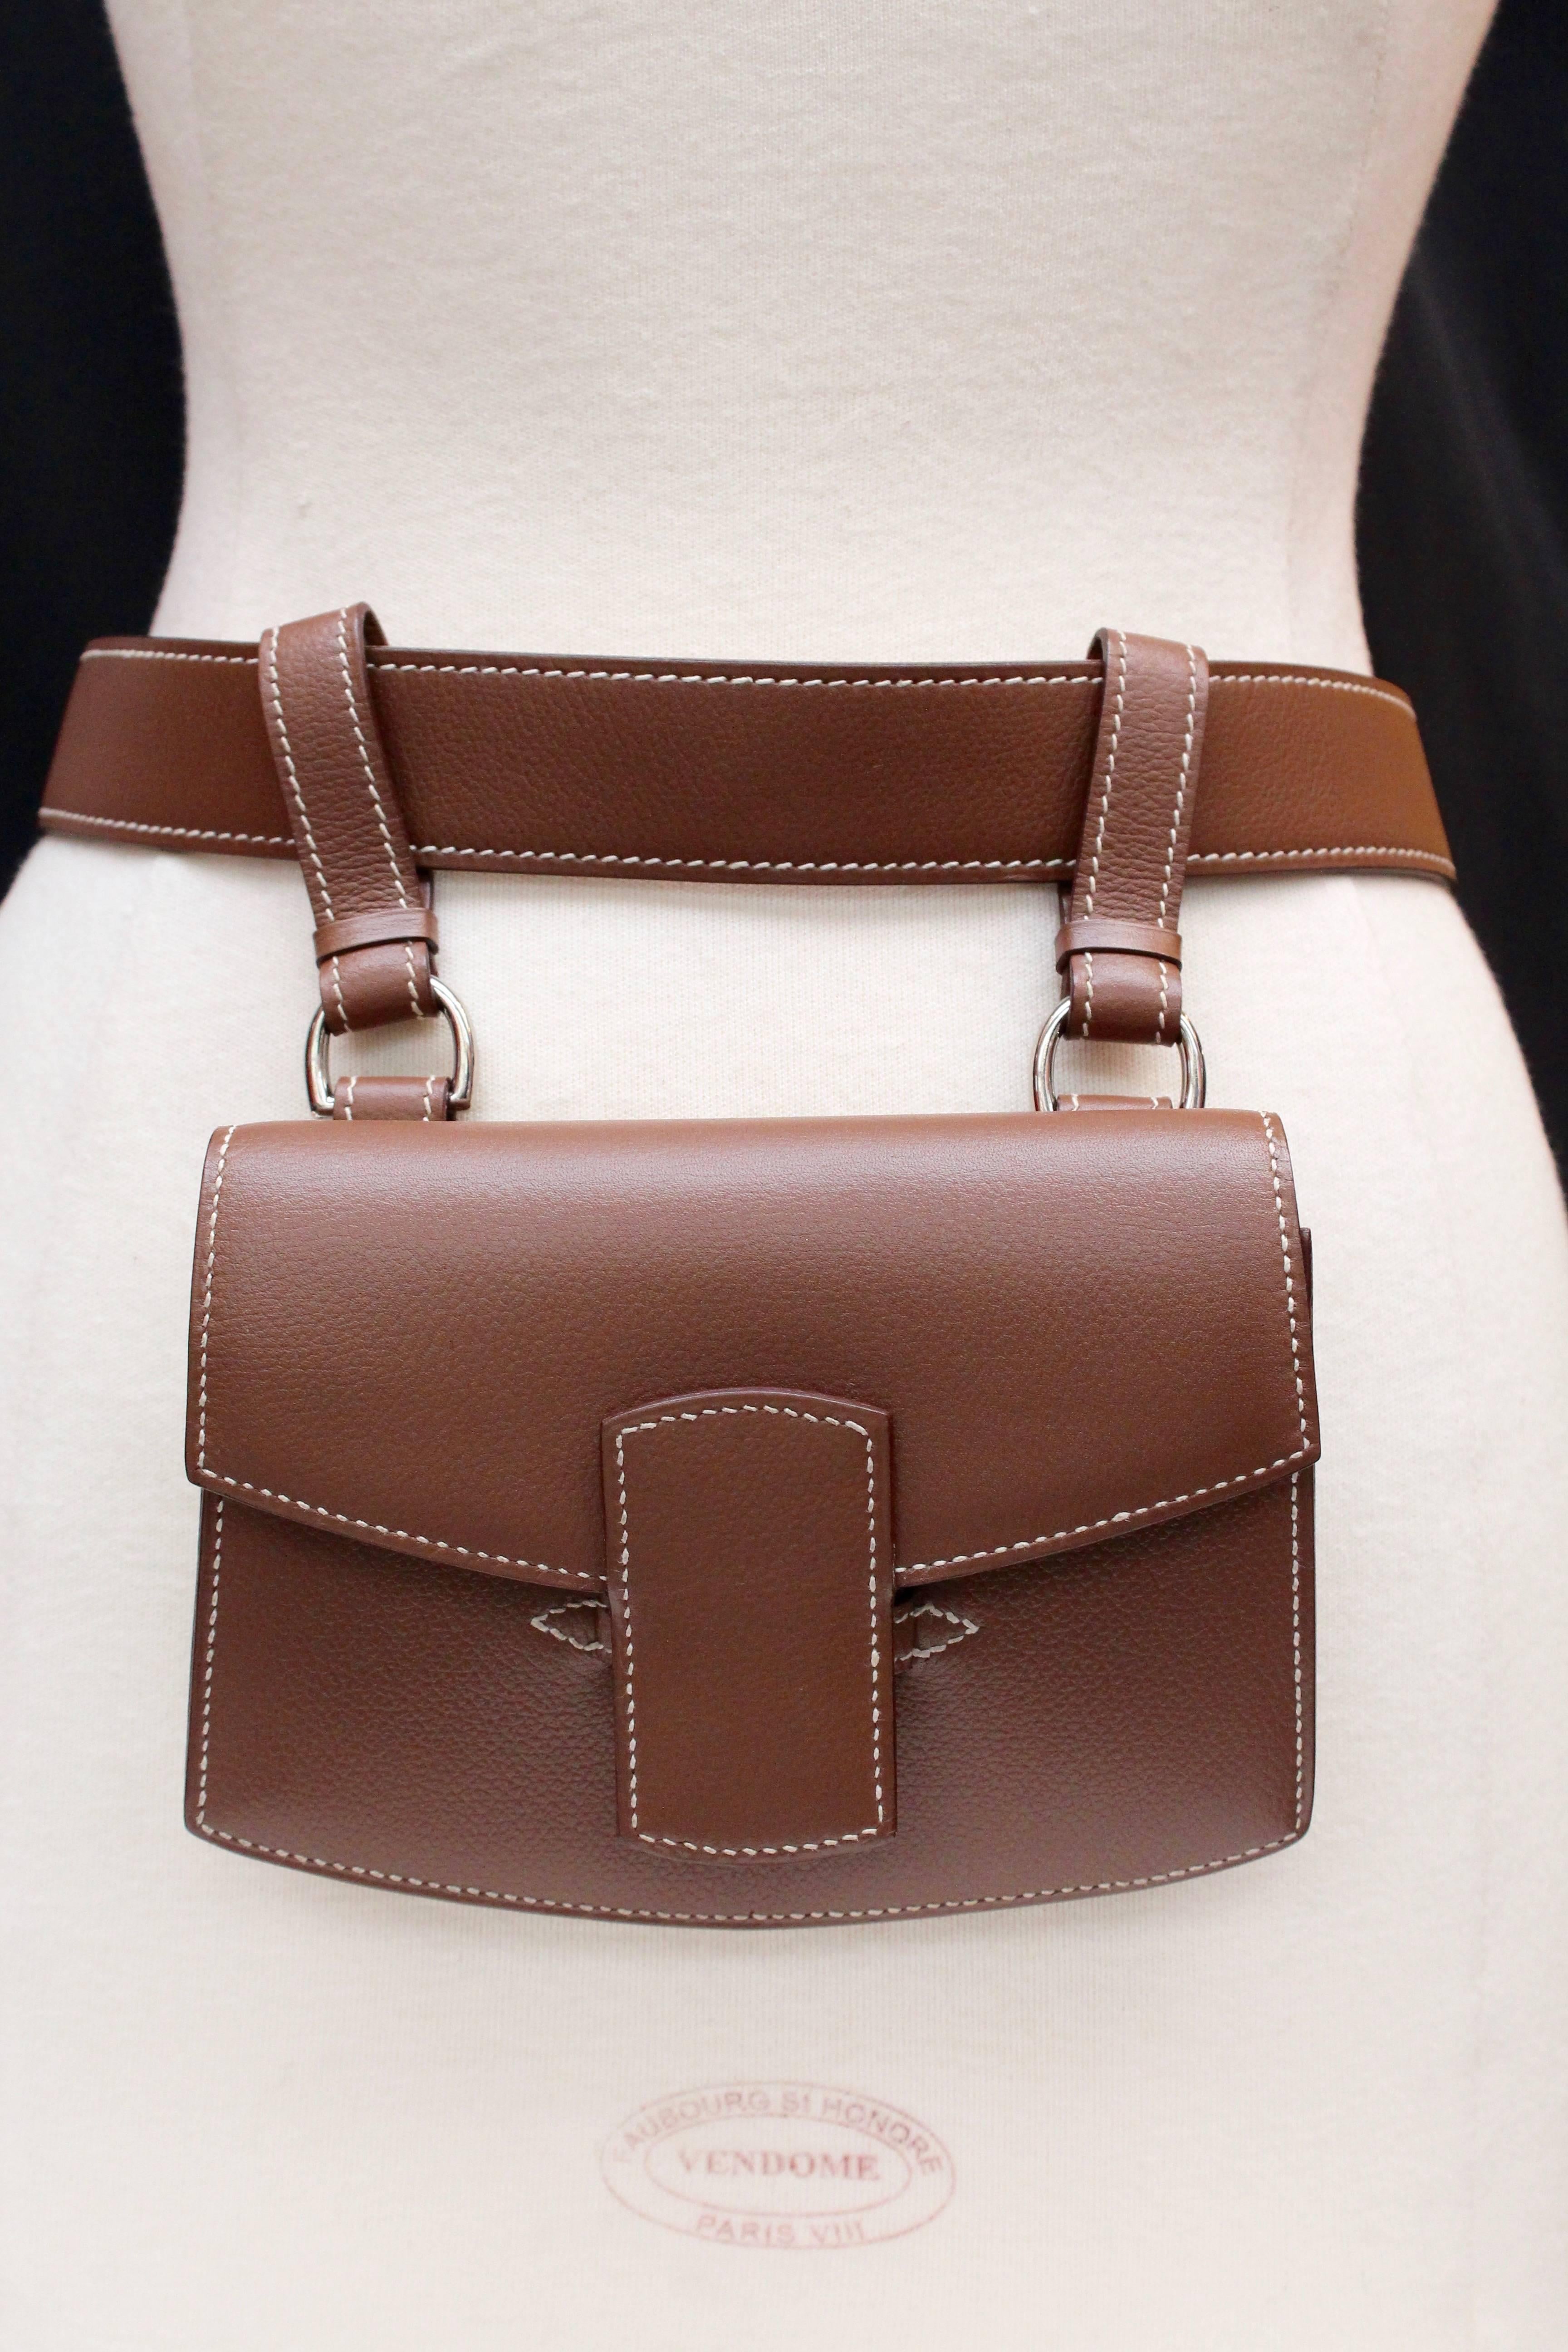 Brown Hermès brown leather belt and clutch